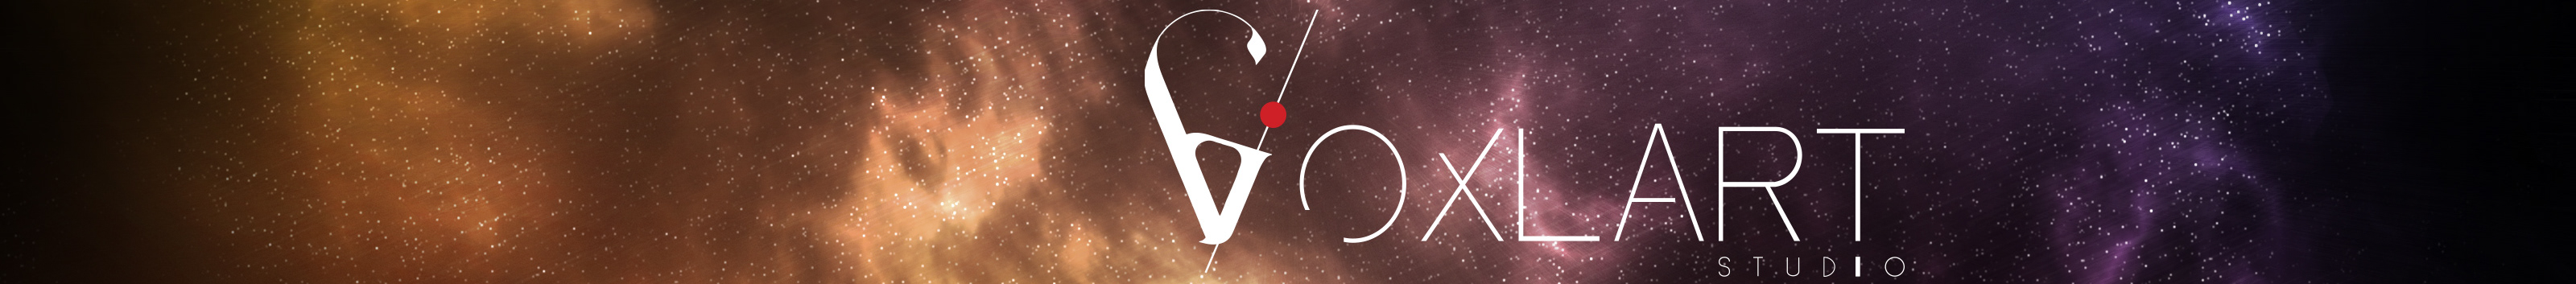 Voxlart Studio's profile banner